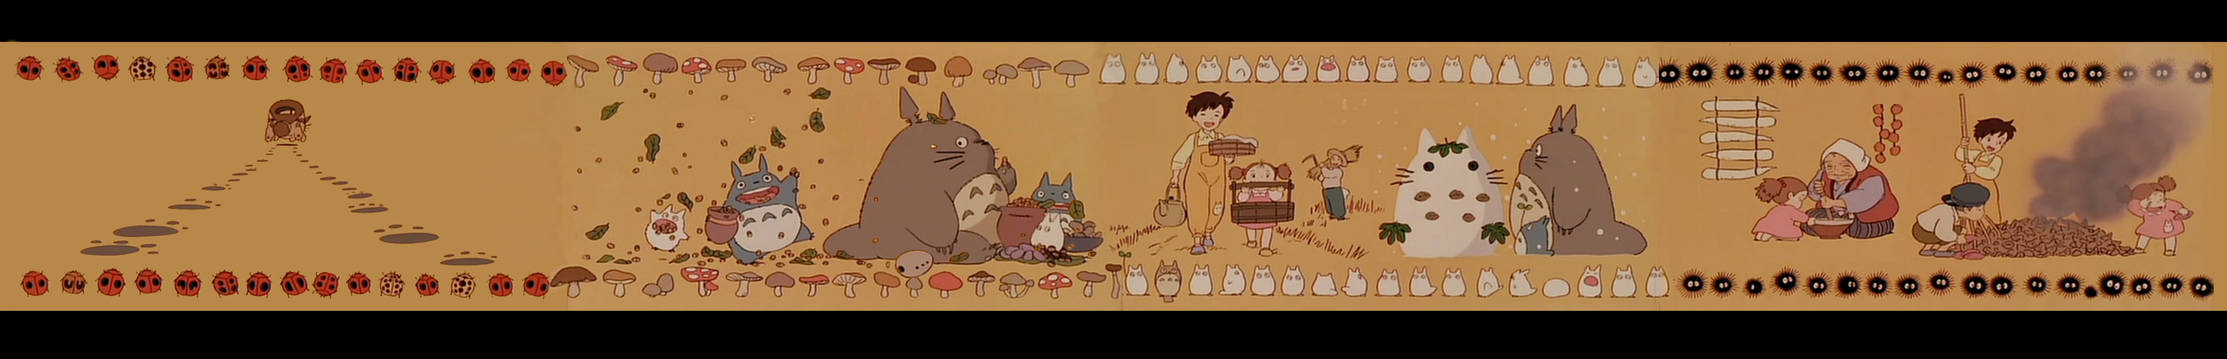 Totoro Final 21